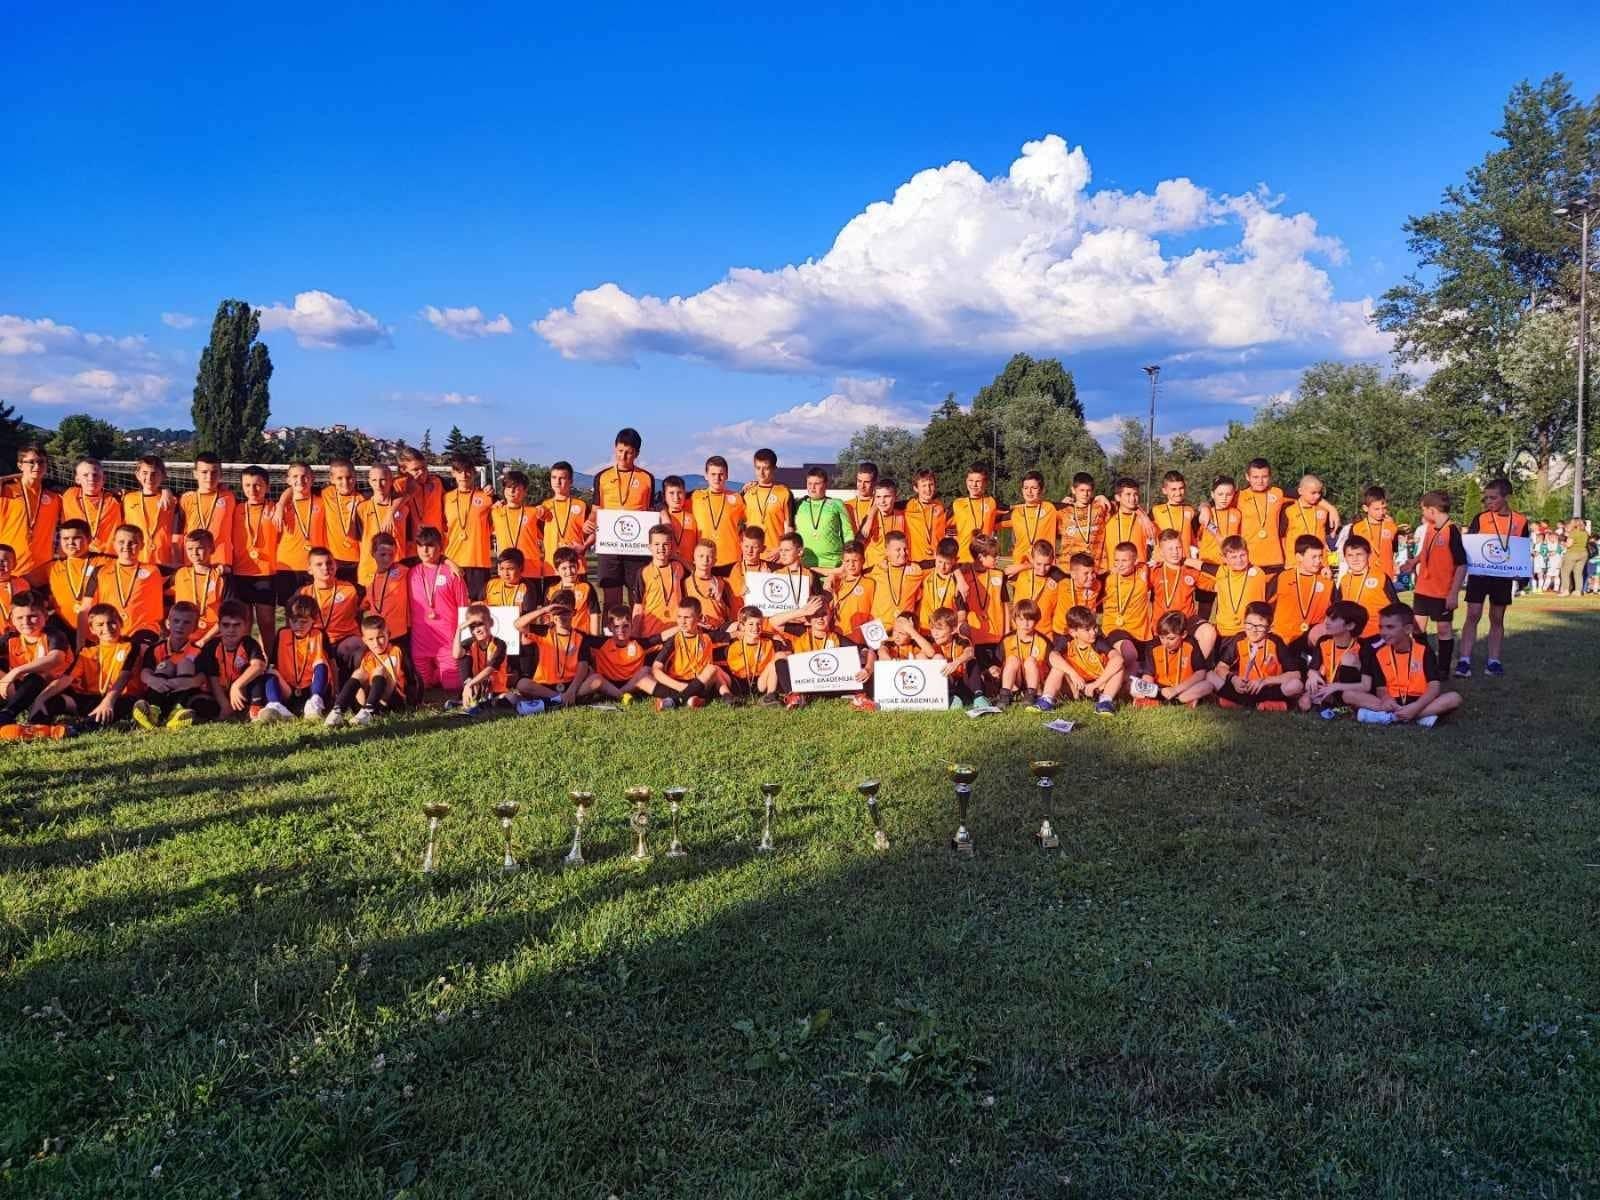 Završena sezona dječijih liga FS KS: Održana svečana ceremonija dodjele pehara i medalja